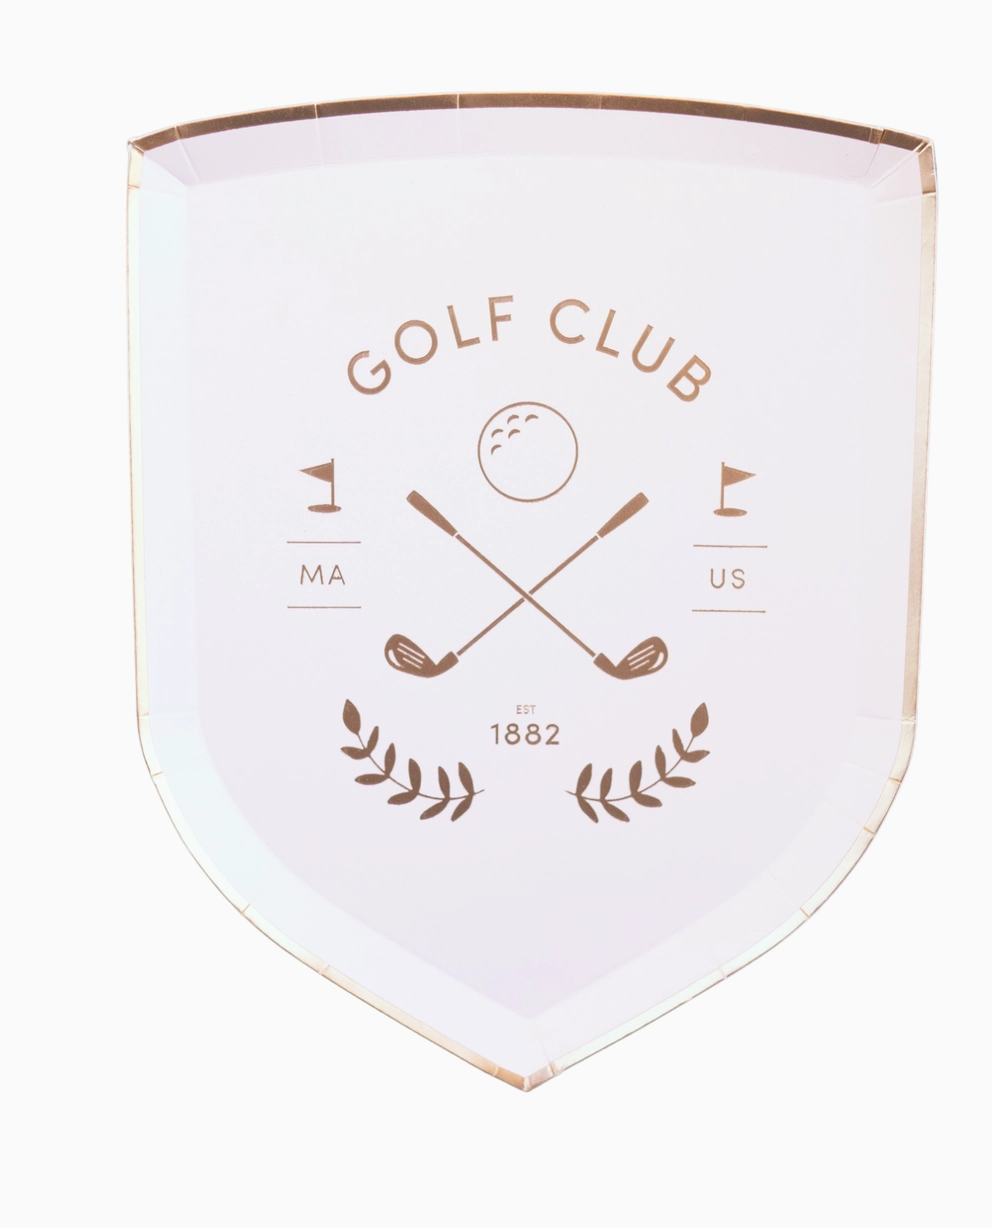 Le Golf Small Plates